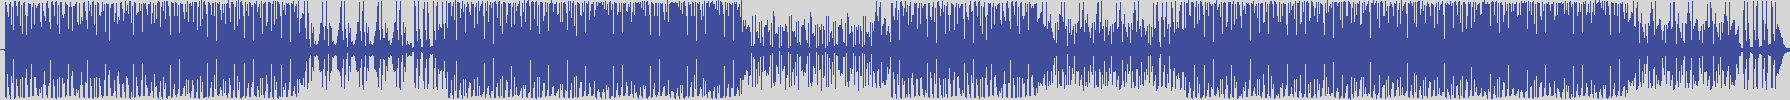 nf_boyz_records [NFY067] Paco Bigat - Audax [Original Mix] audio wave form